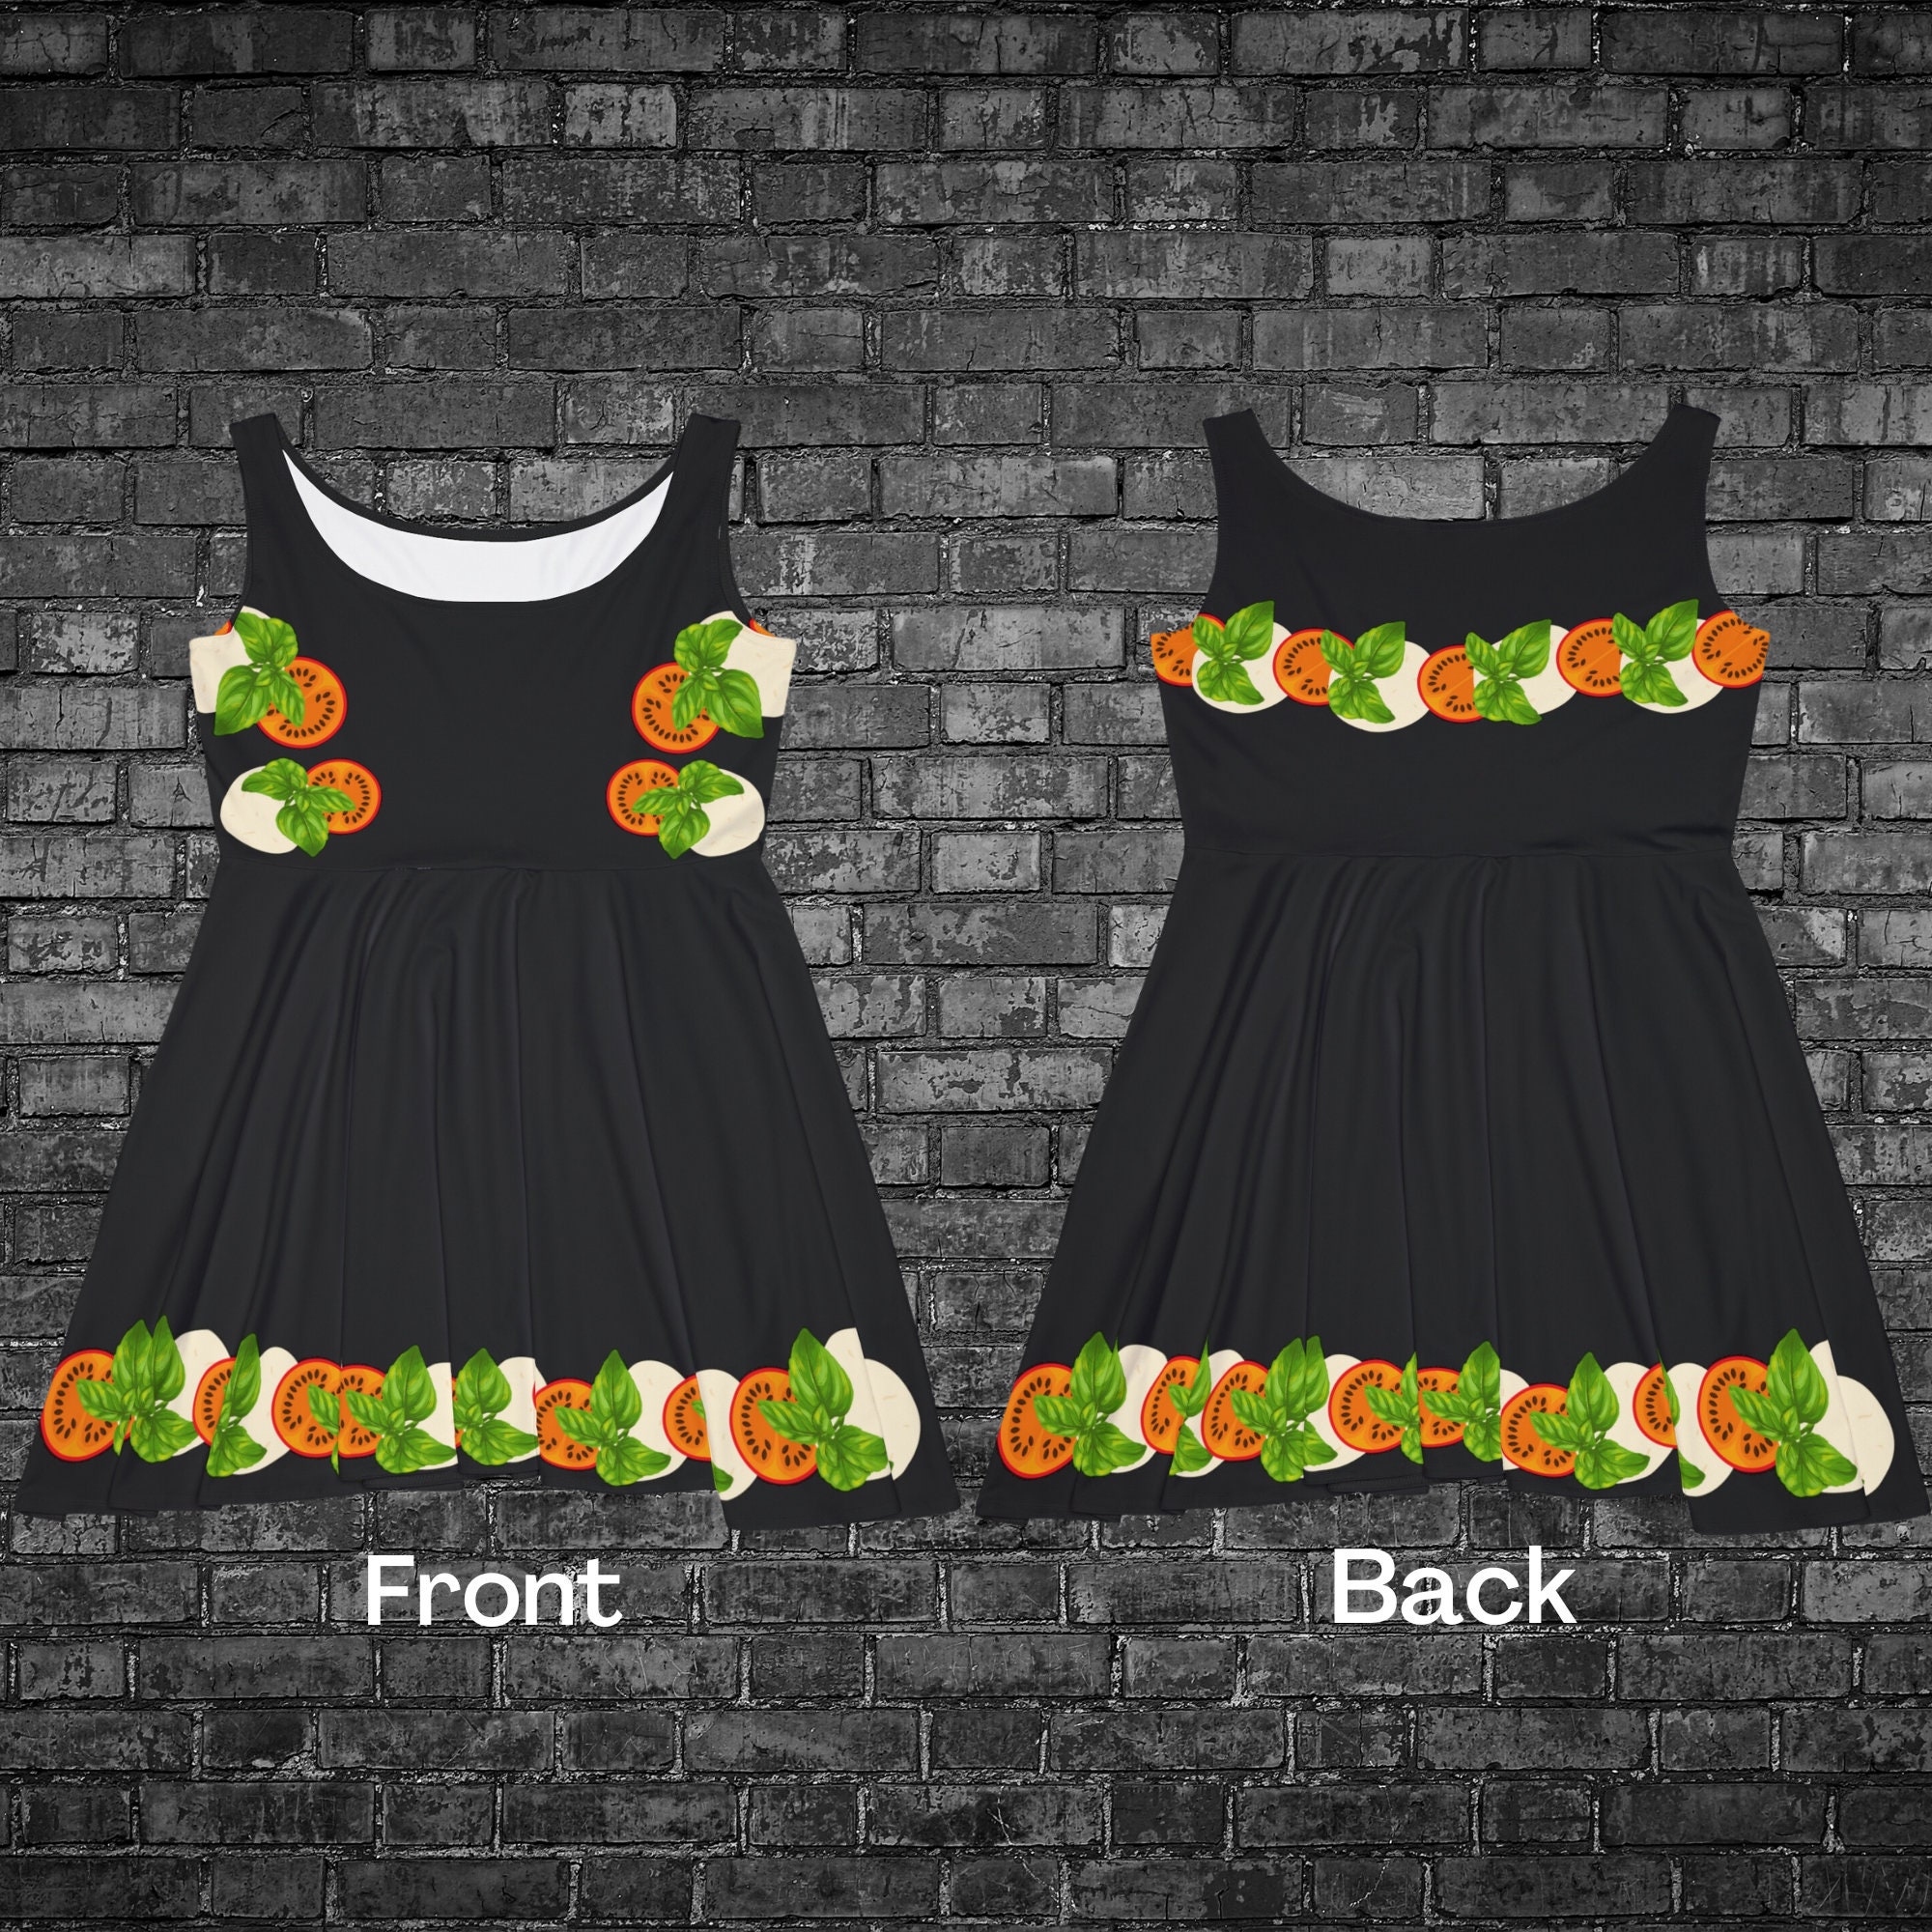 Food Inspired Clothing: Tasty Italian Caprese Salad Dress L Fun